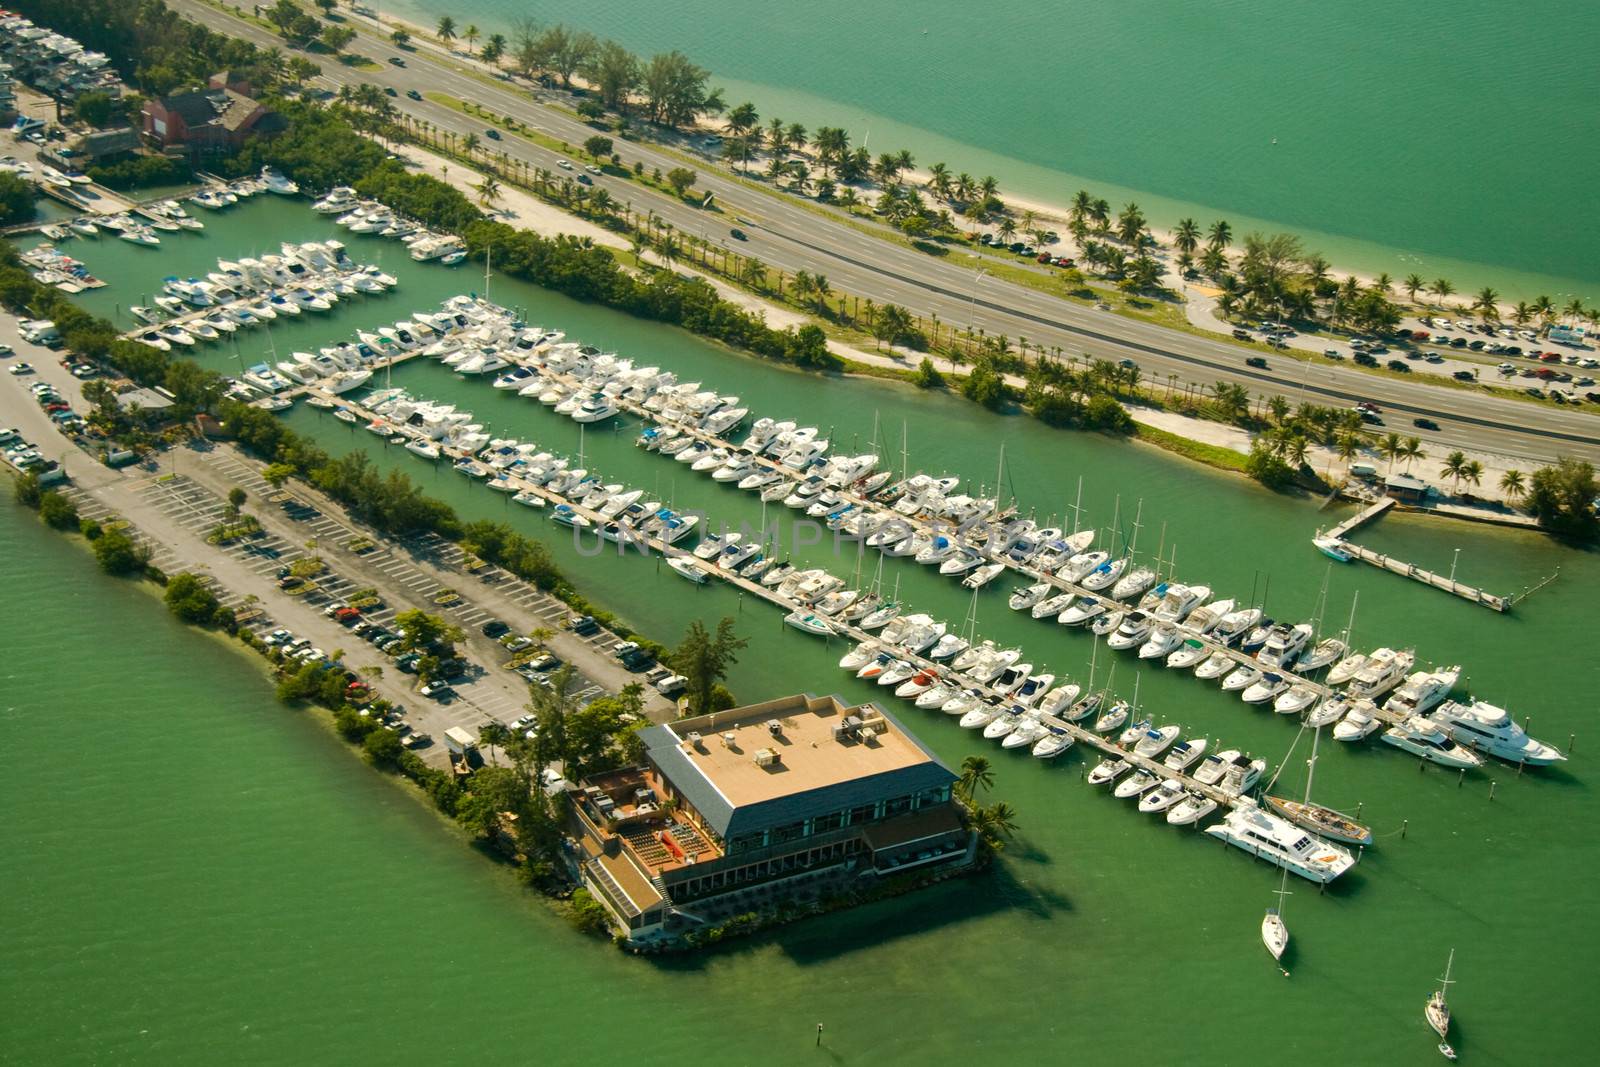 Aerial view of boats docked at a marina, Miami, Miami-Dade County, Florida, USA